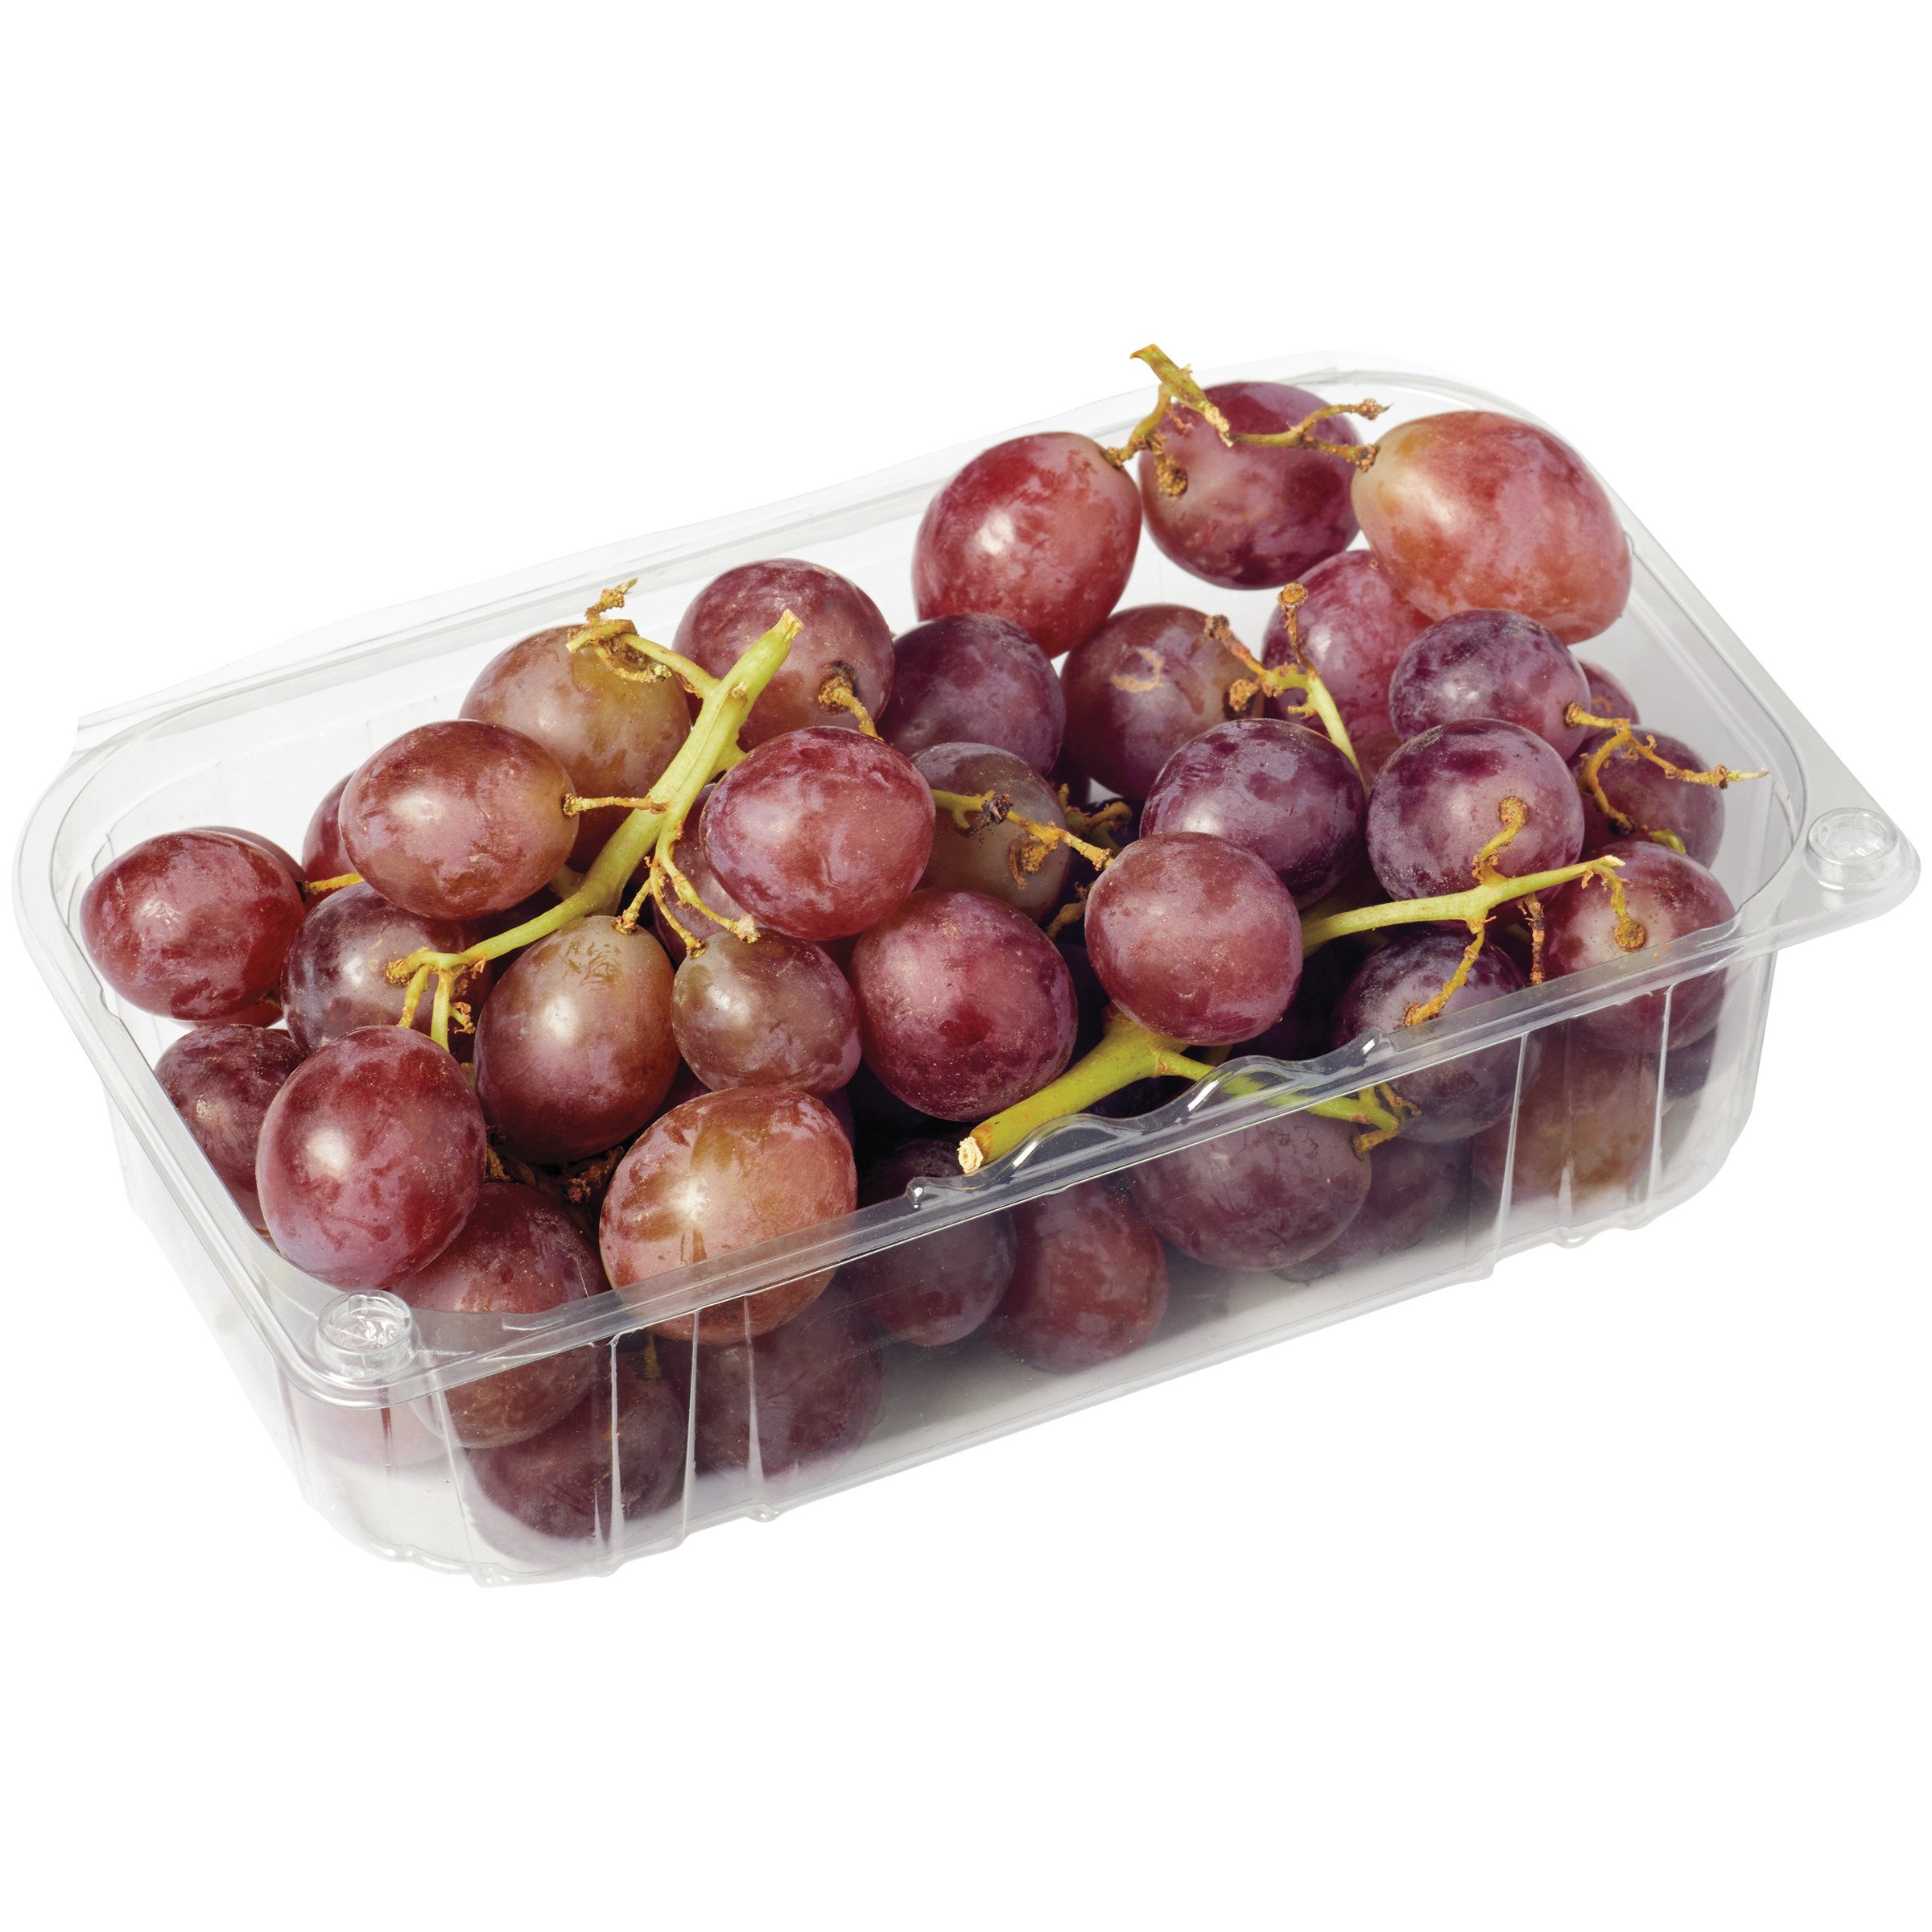 H-E-B Premium Fresh Seedless Red Grapes